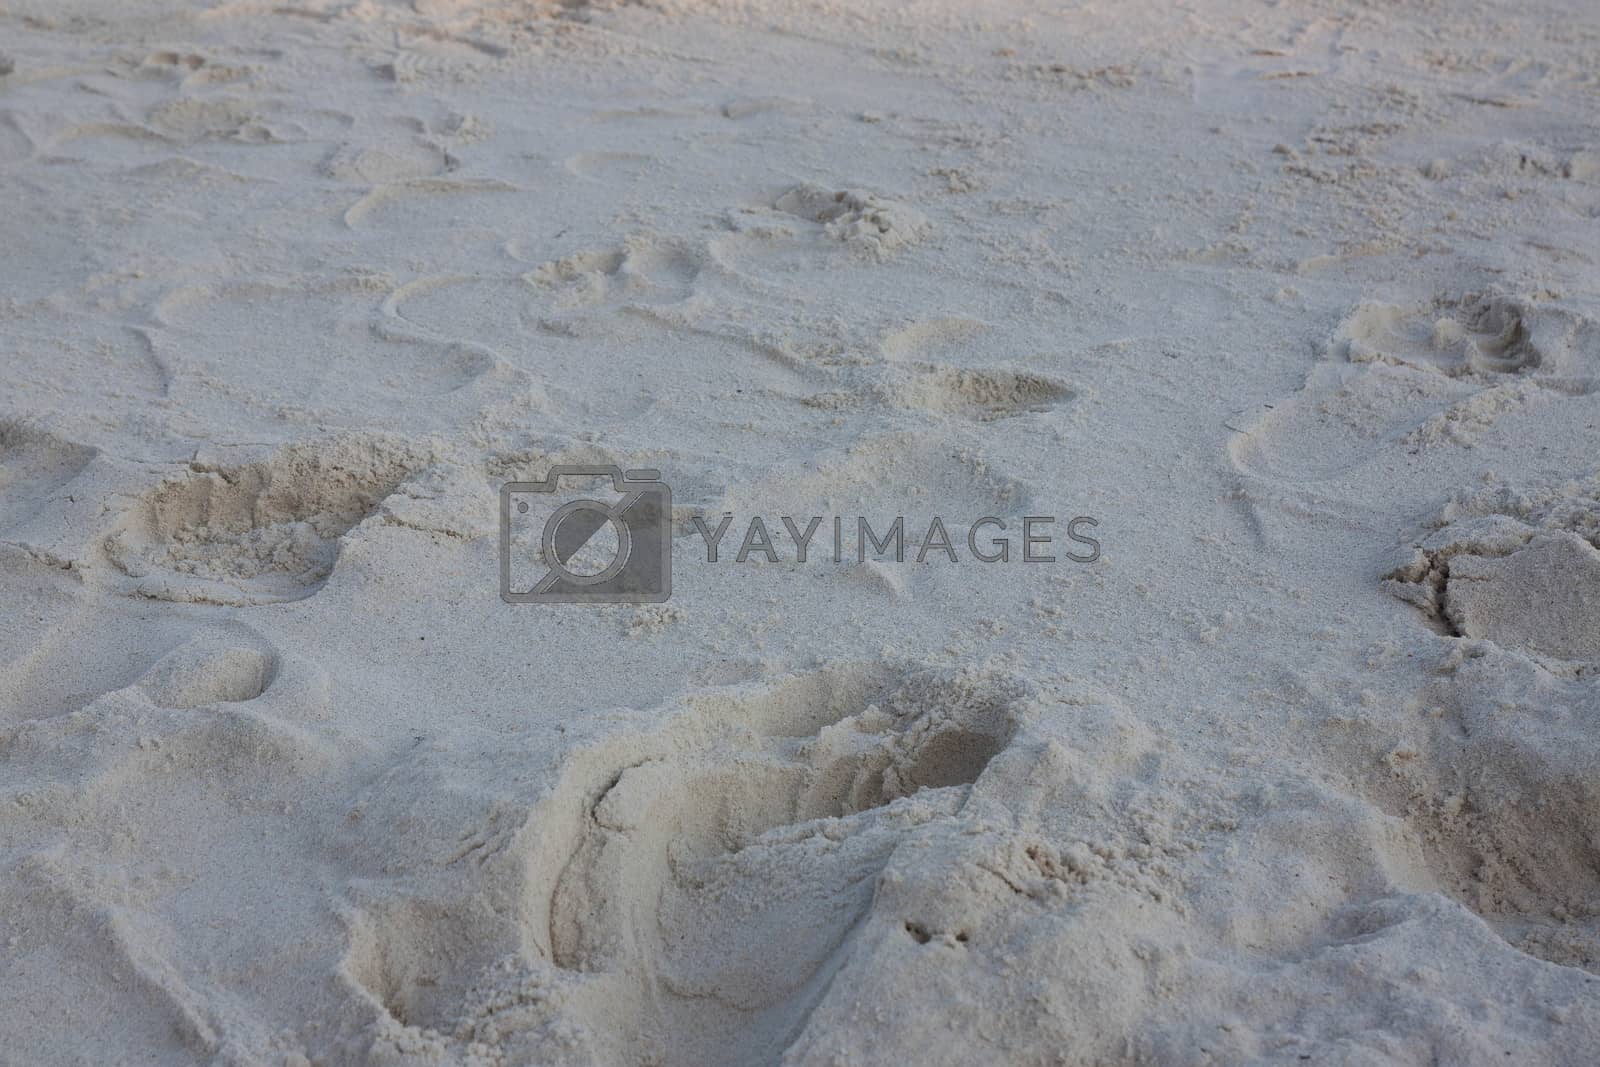 Royalty free image of Footprints  by primzrider